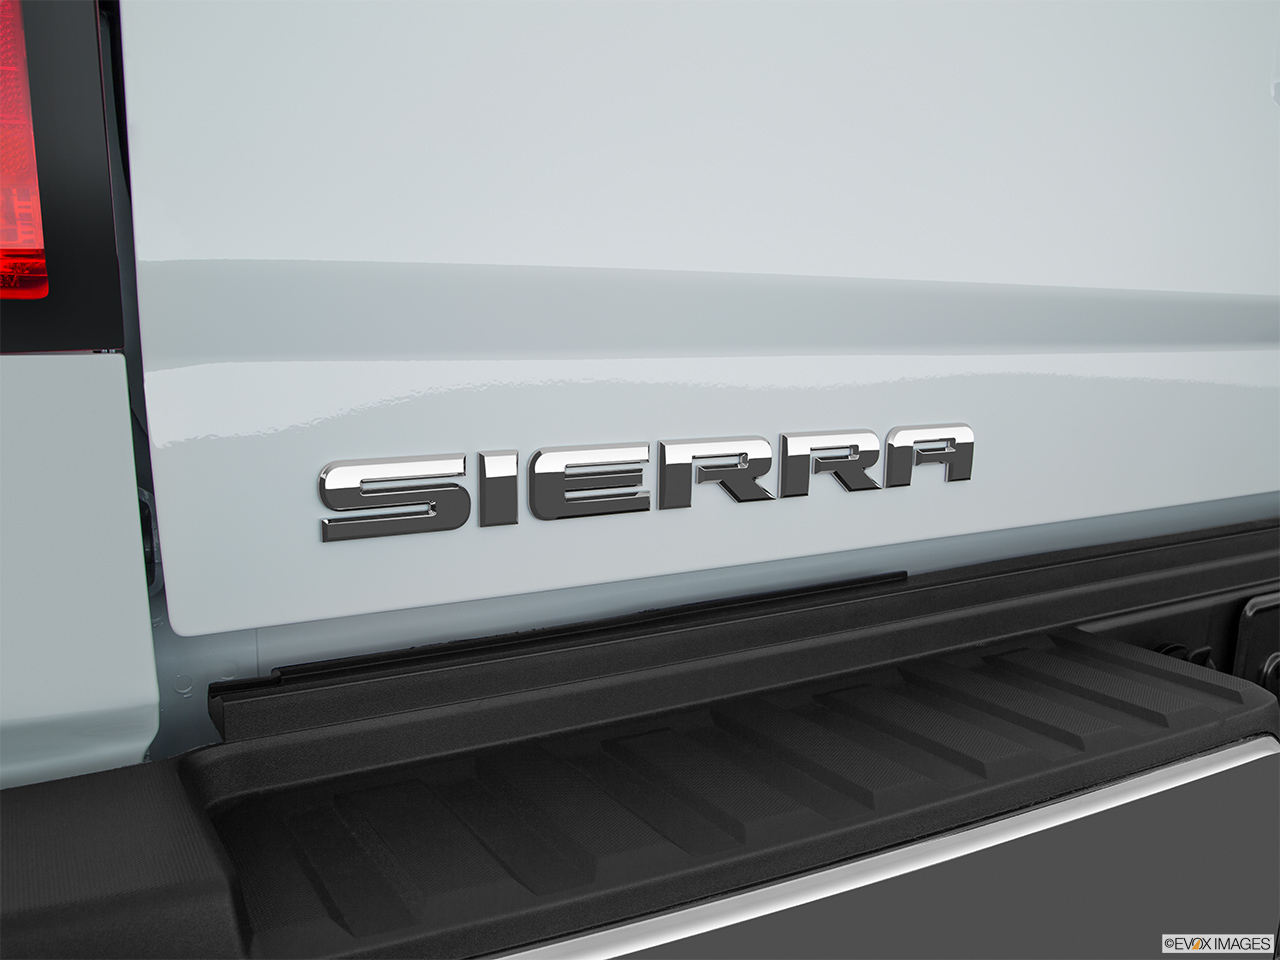 2017 GMC Sierra 3500 HD Base Rear model badge/emblem 